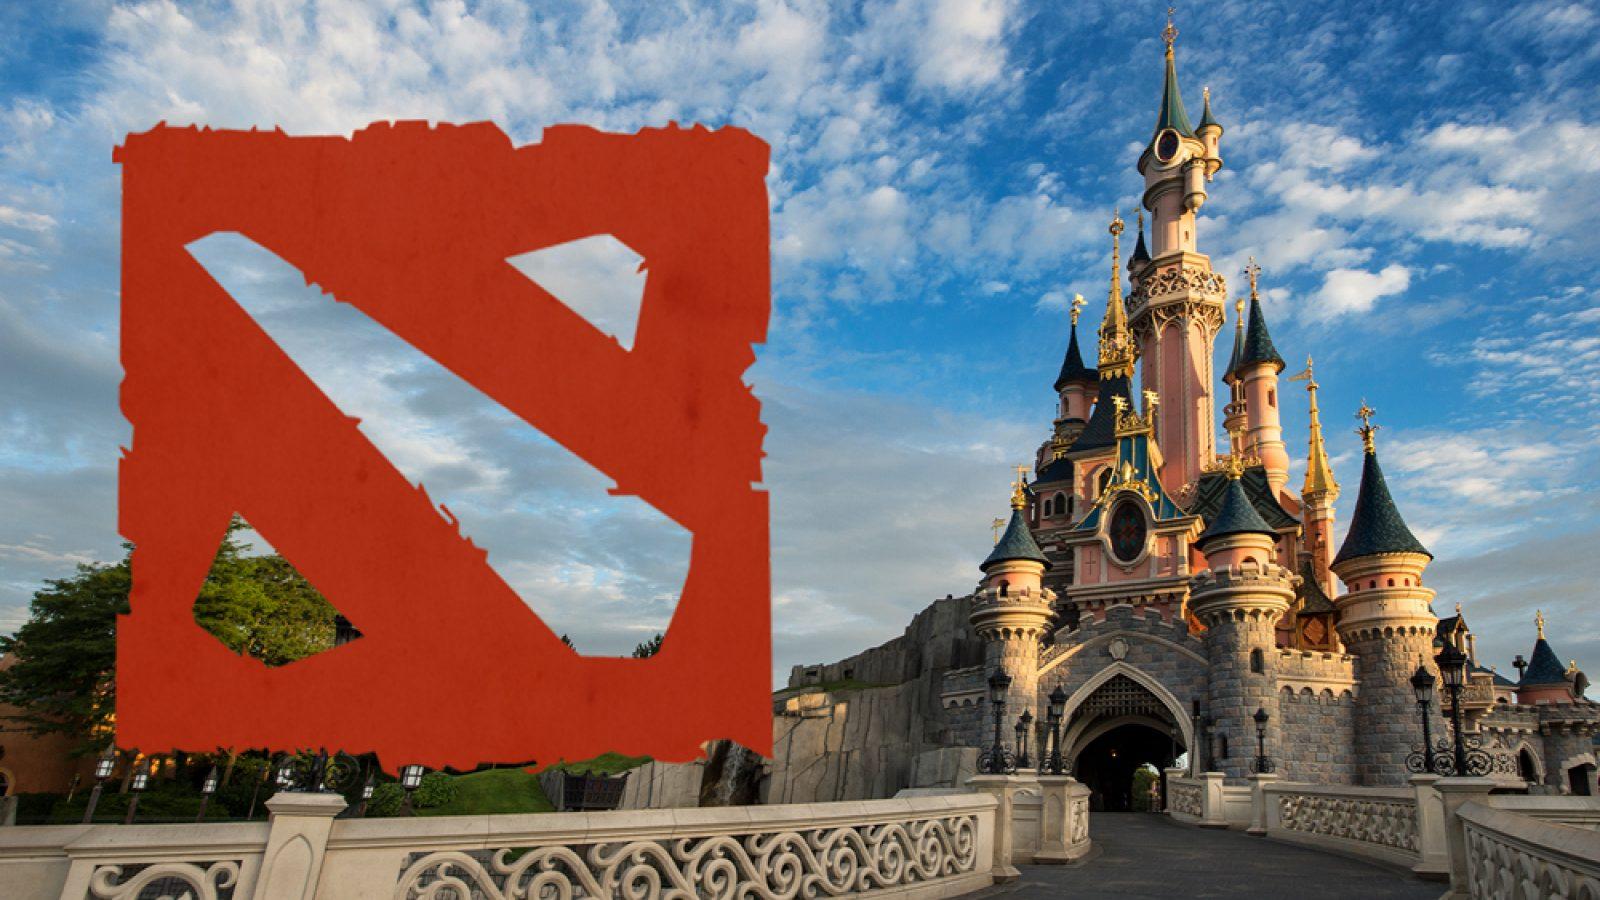 Rumor Beredar, Major Yang Tersisa Akan Diadakan Di Disneyland Paris